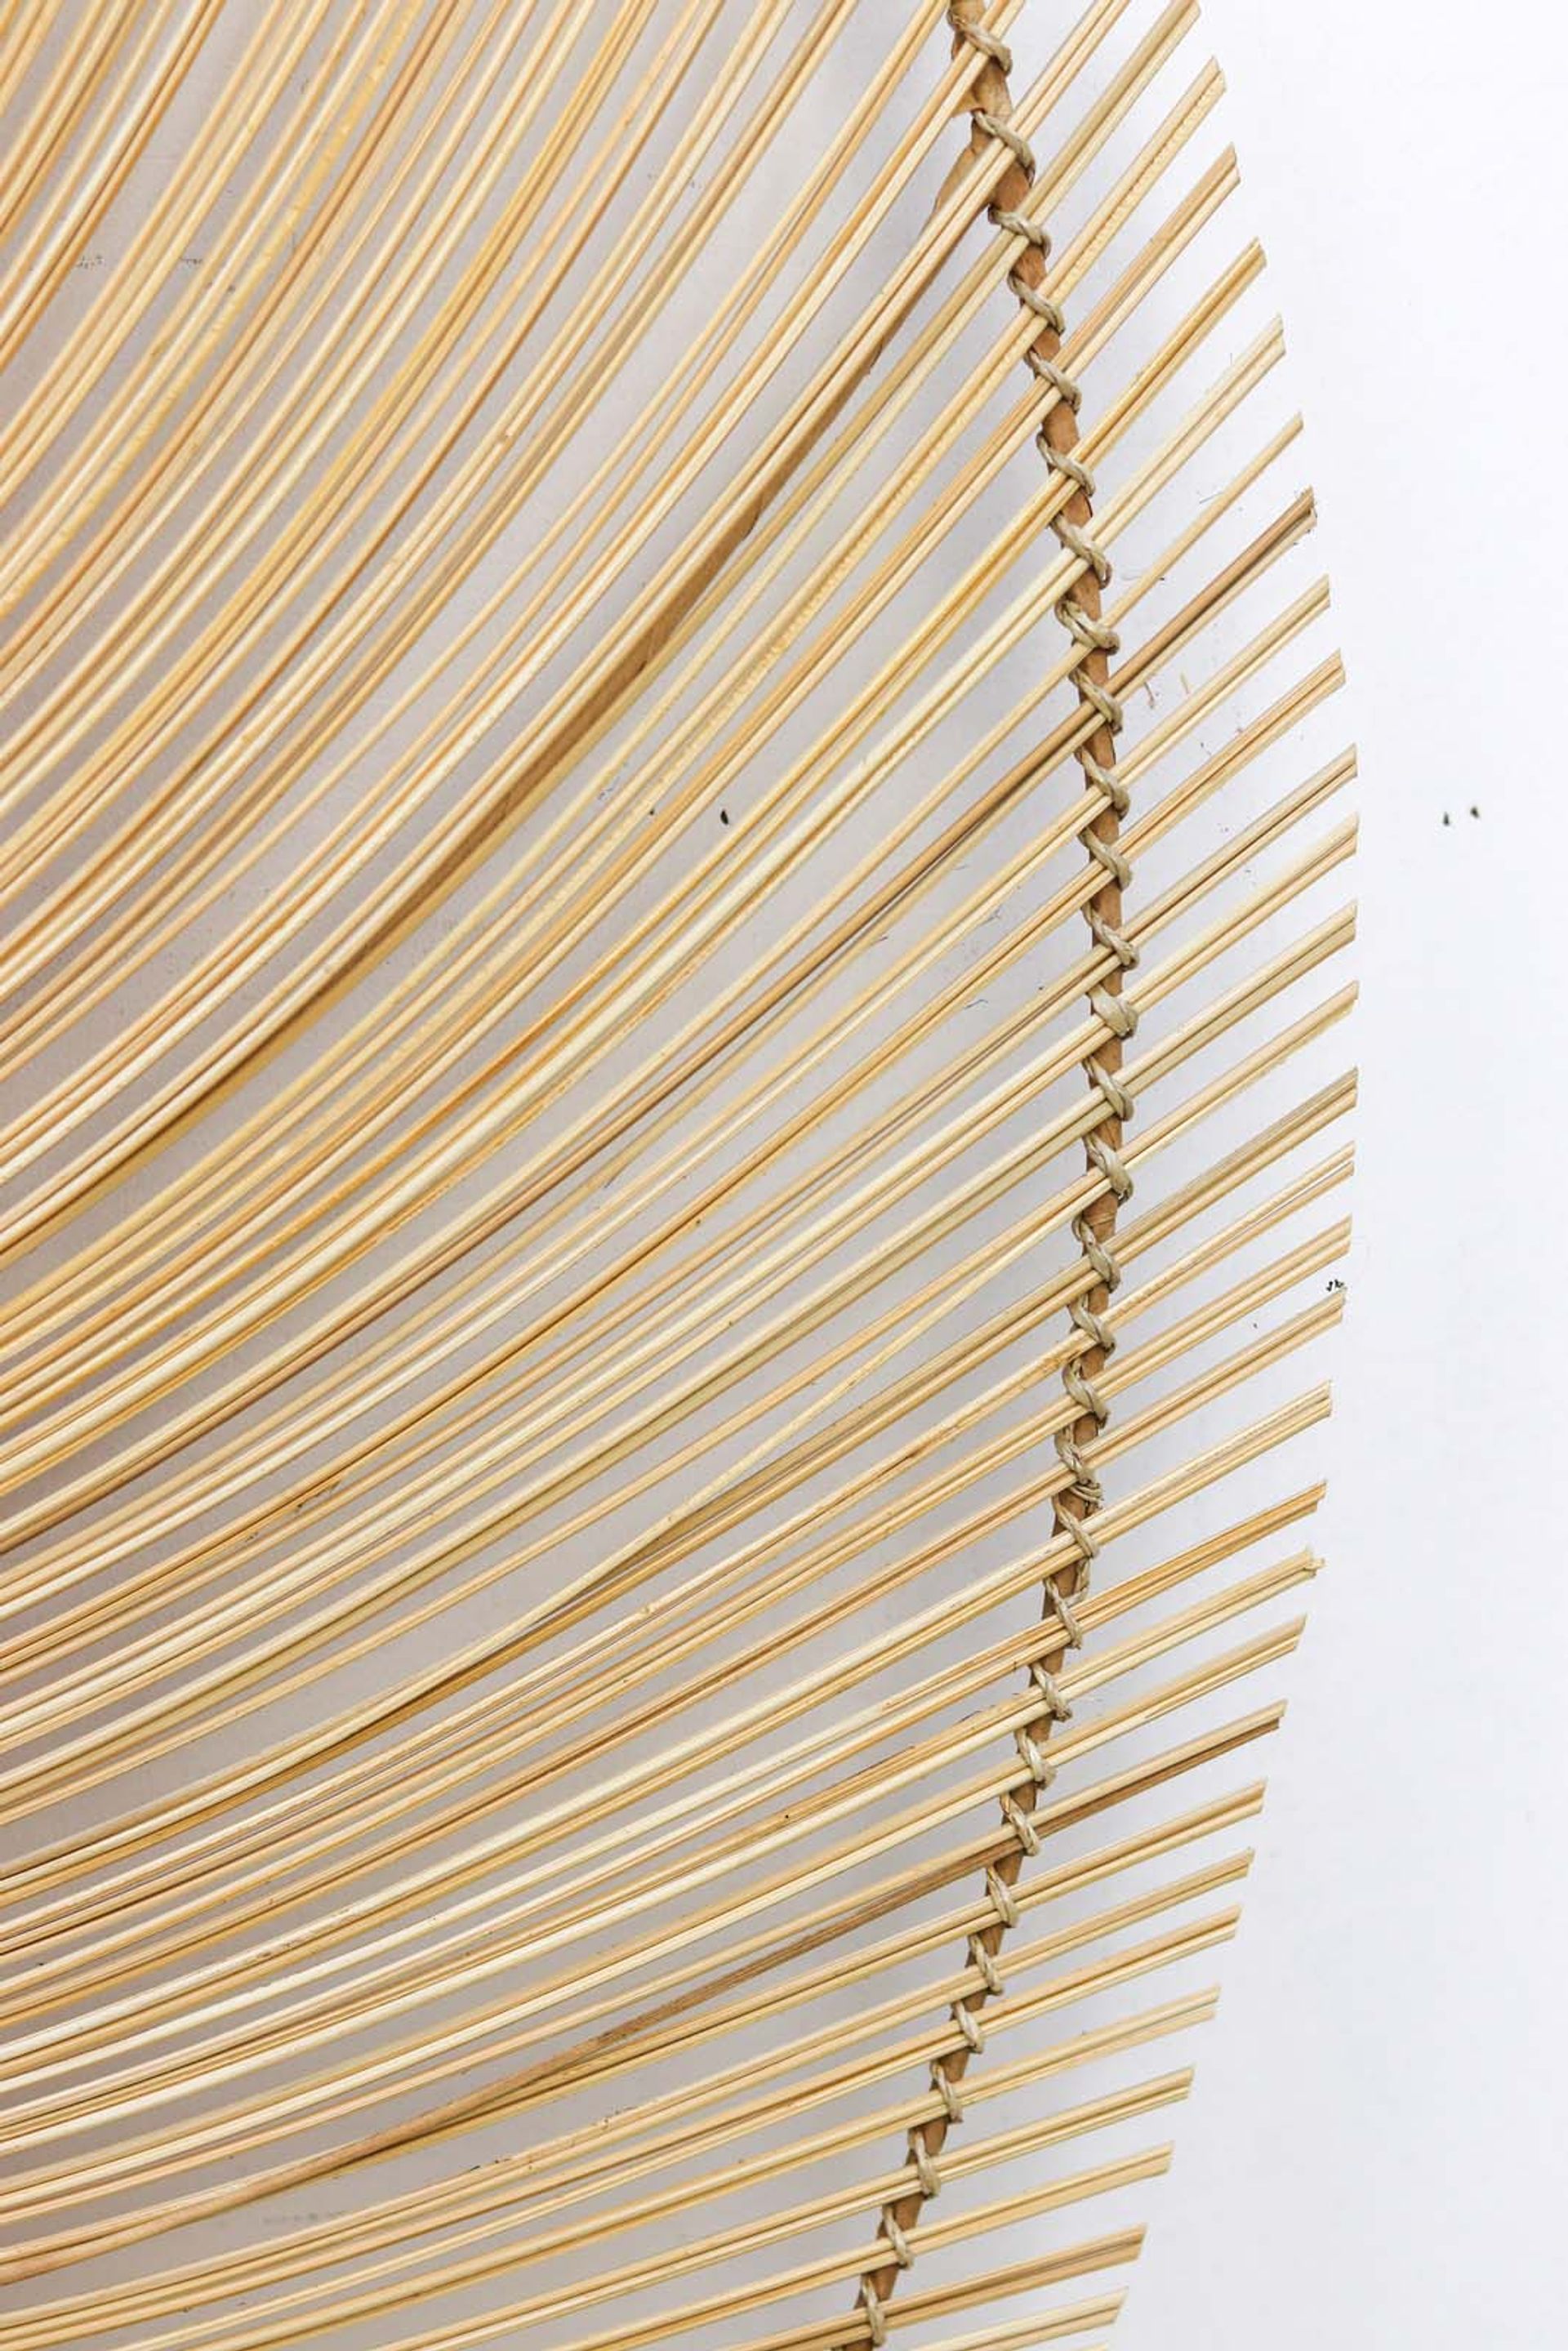 Wandspiegel EDE-04 Natural Bambus B/H/T: 5 cm 117 cm 117 cm